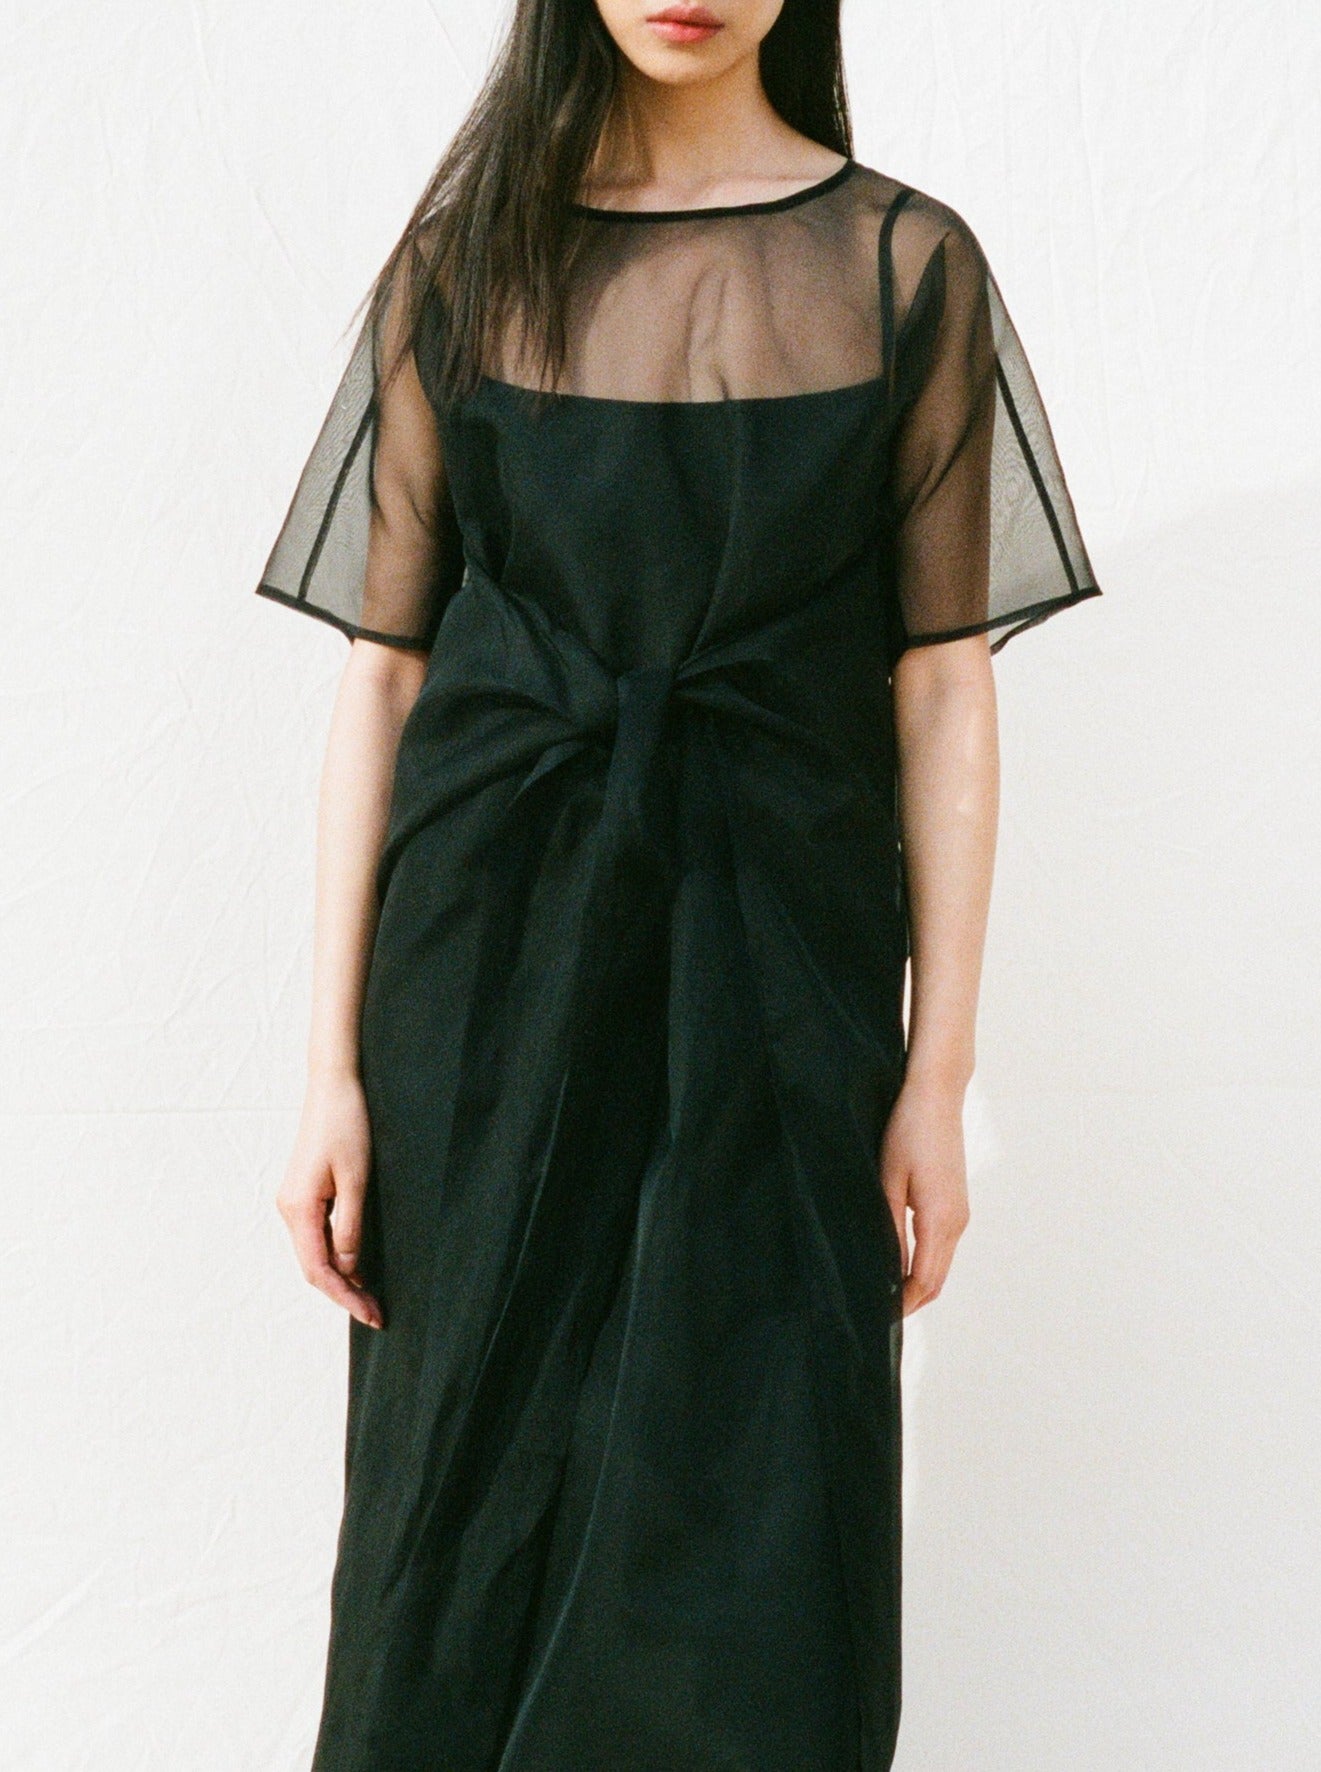 Thumbnail image of Gia Dress in Onyx